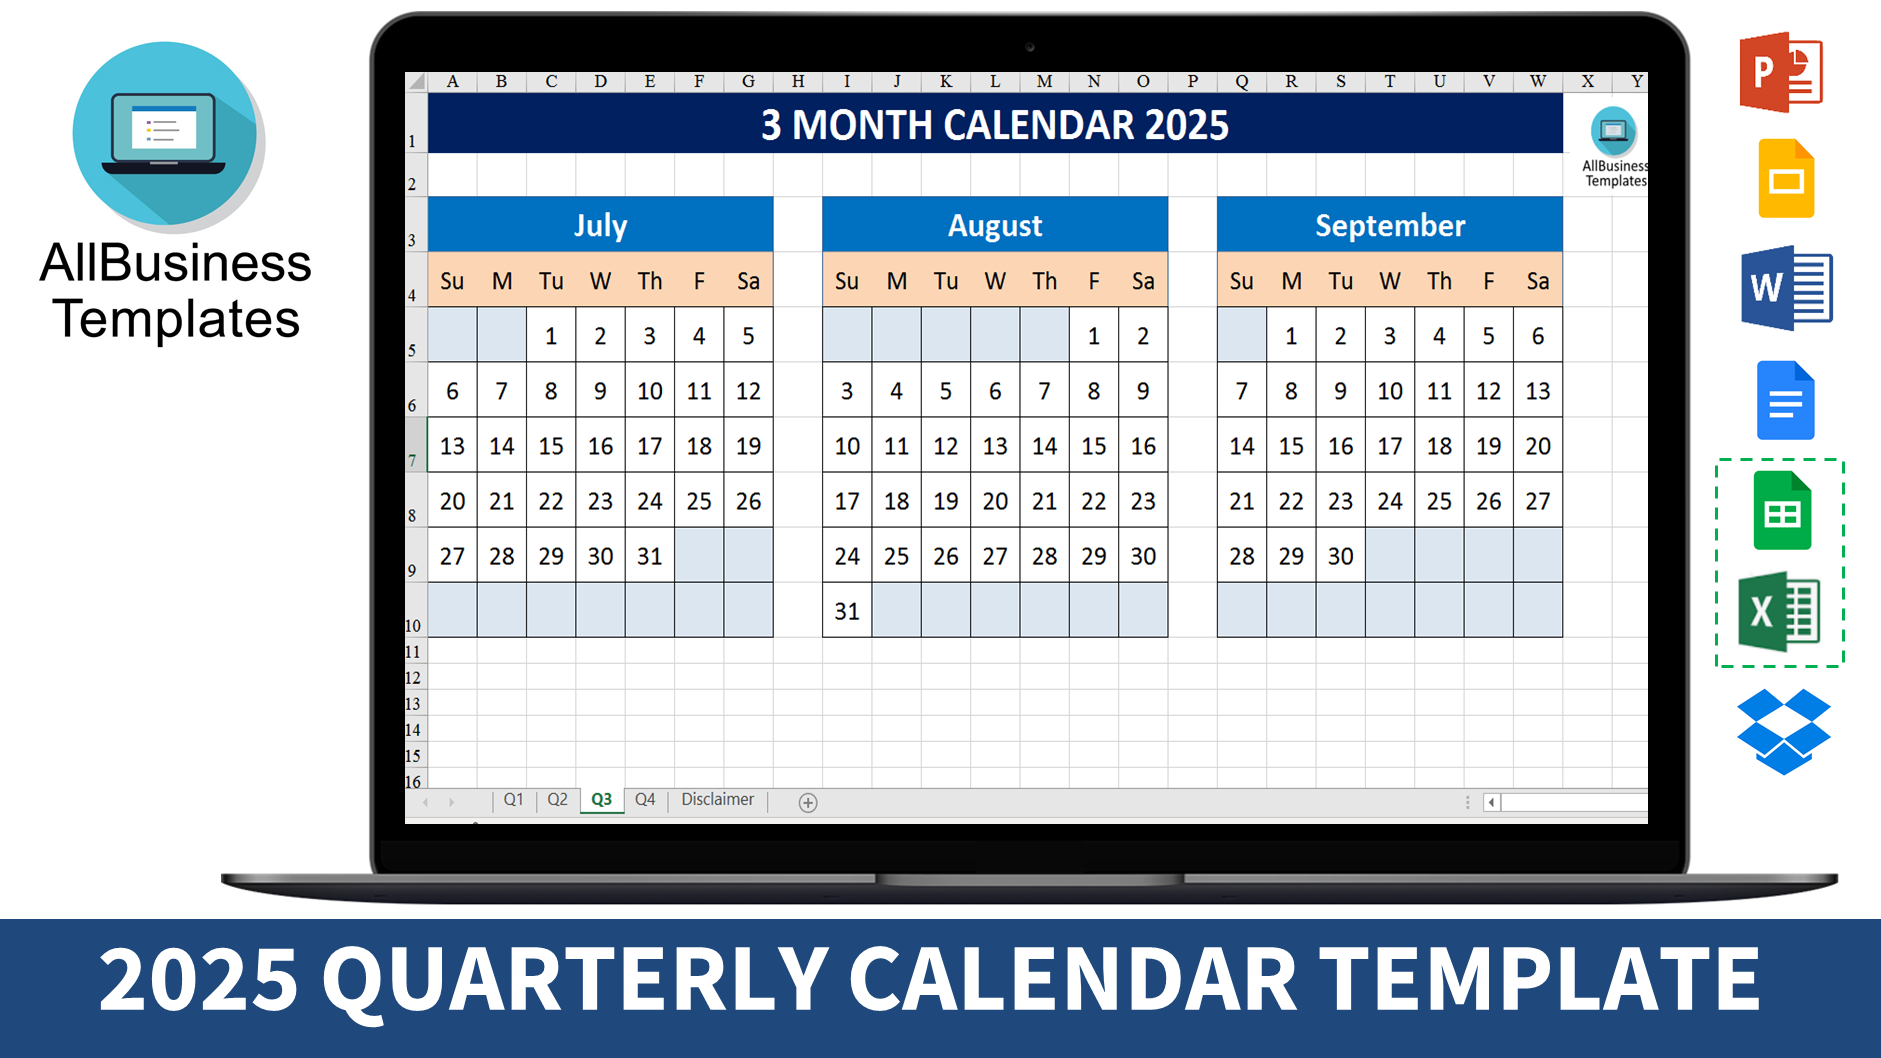 3 Month Calendar 2025 main image